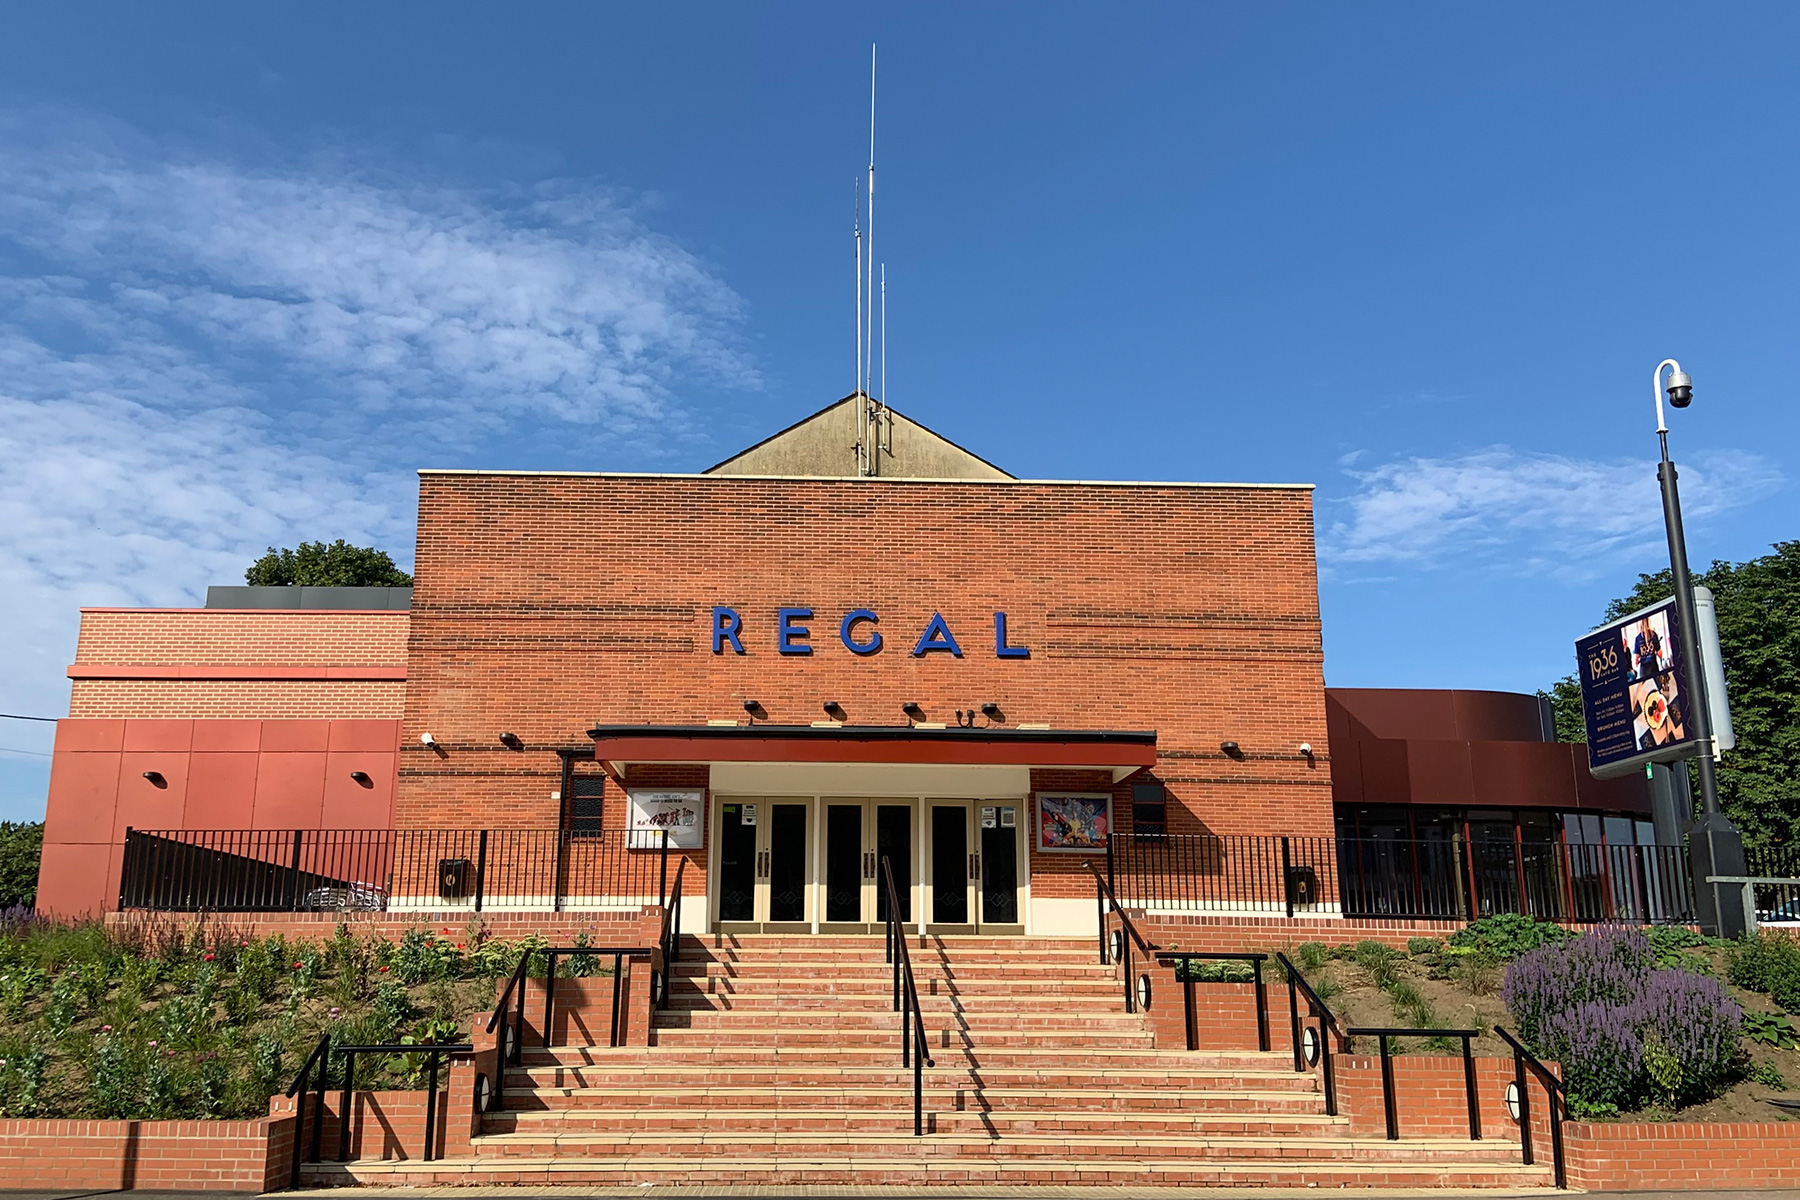 Regal Theatre, Stowmarket